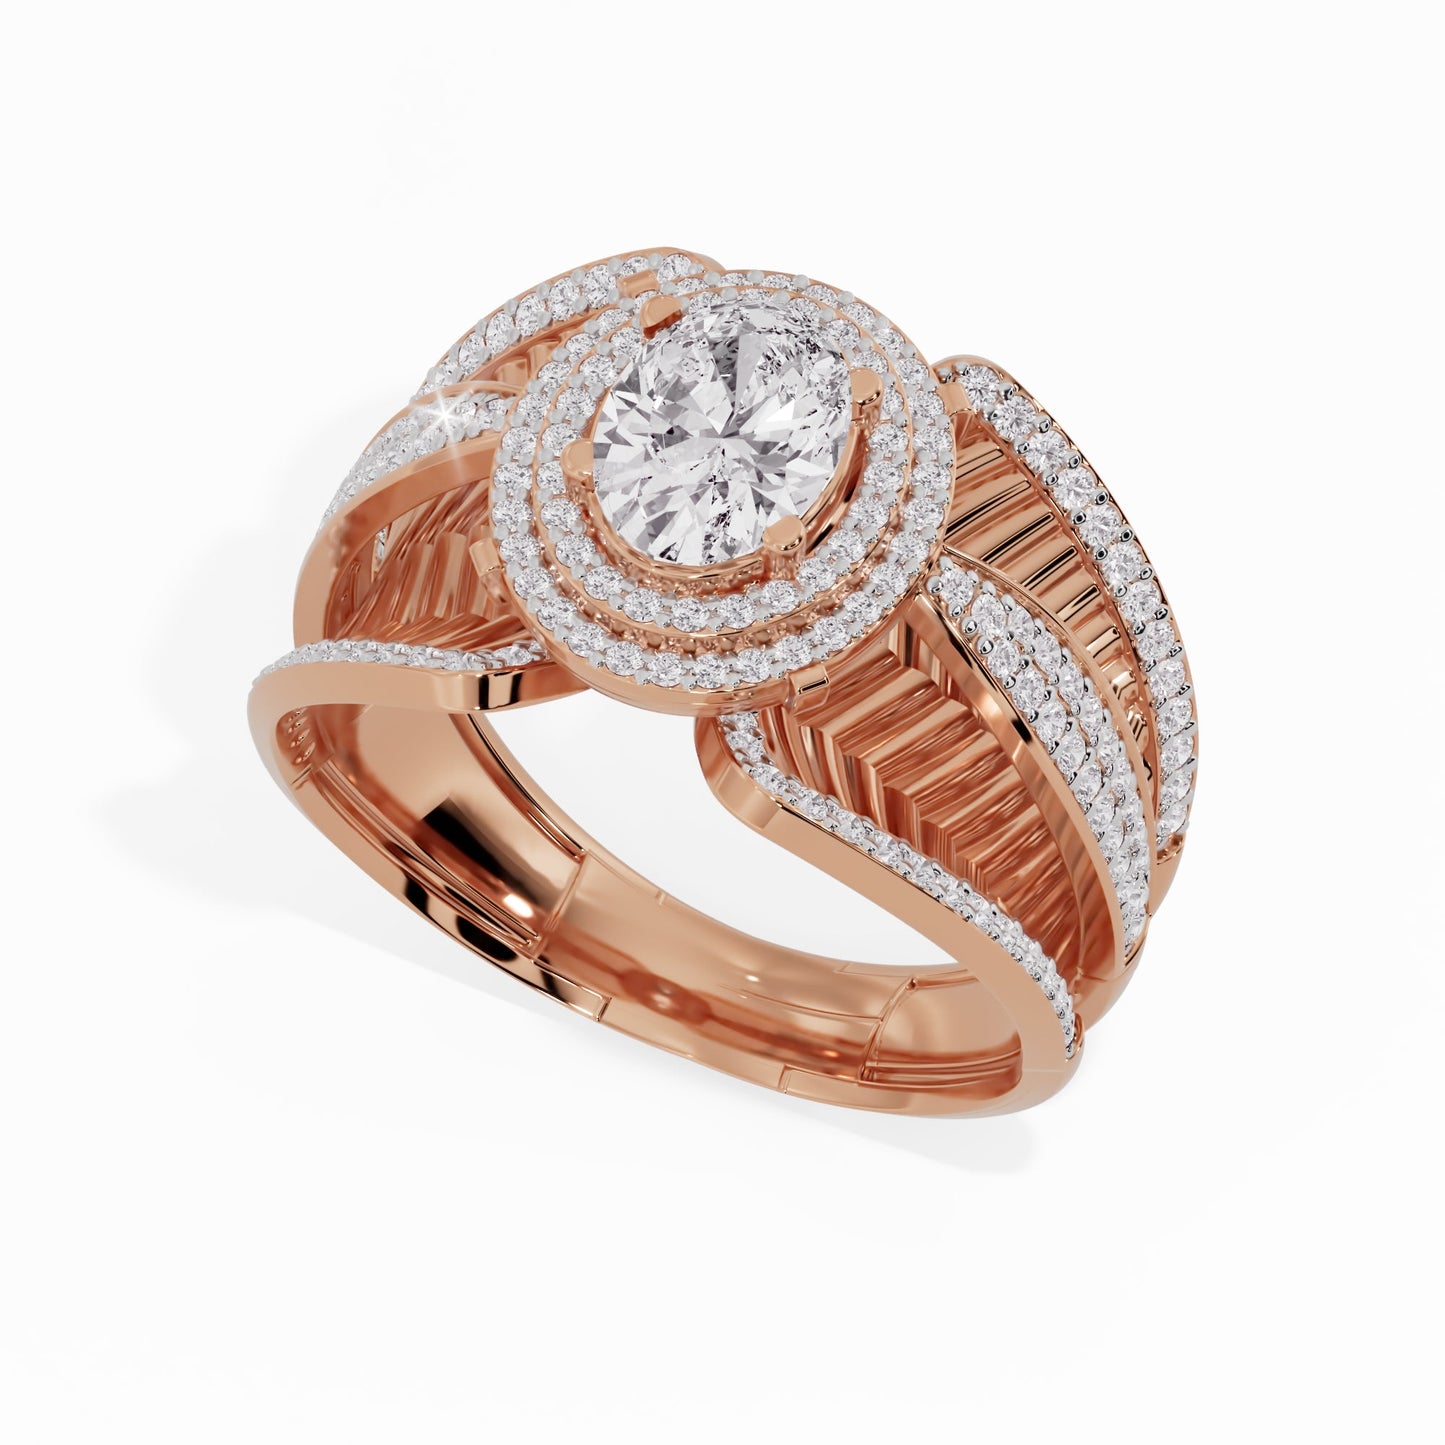 Majestic Marquise Diamond Ring